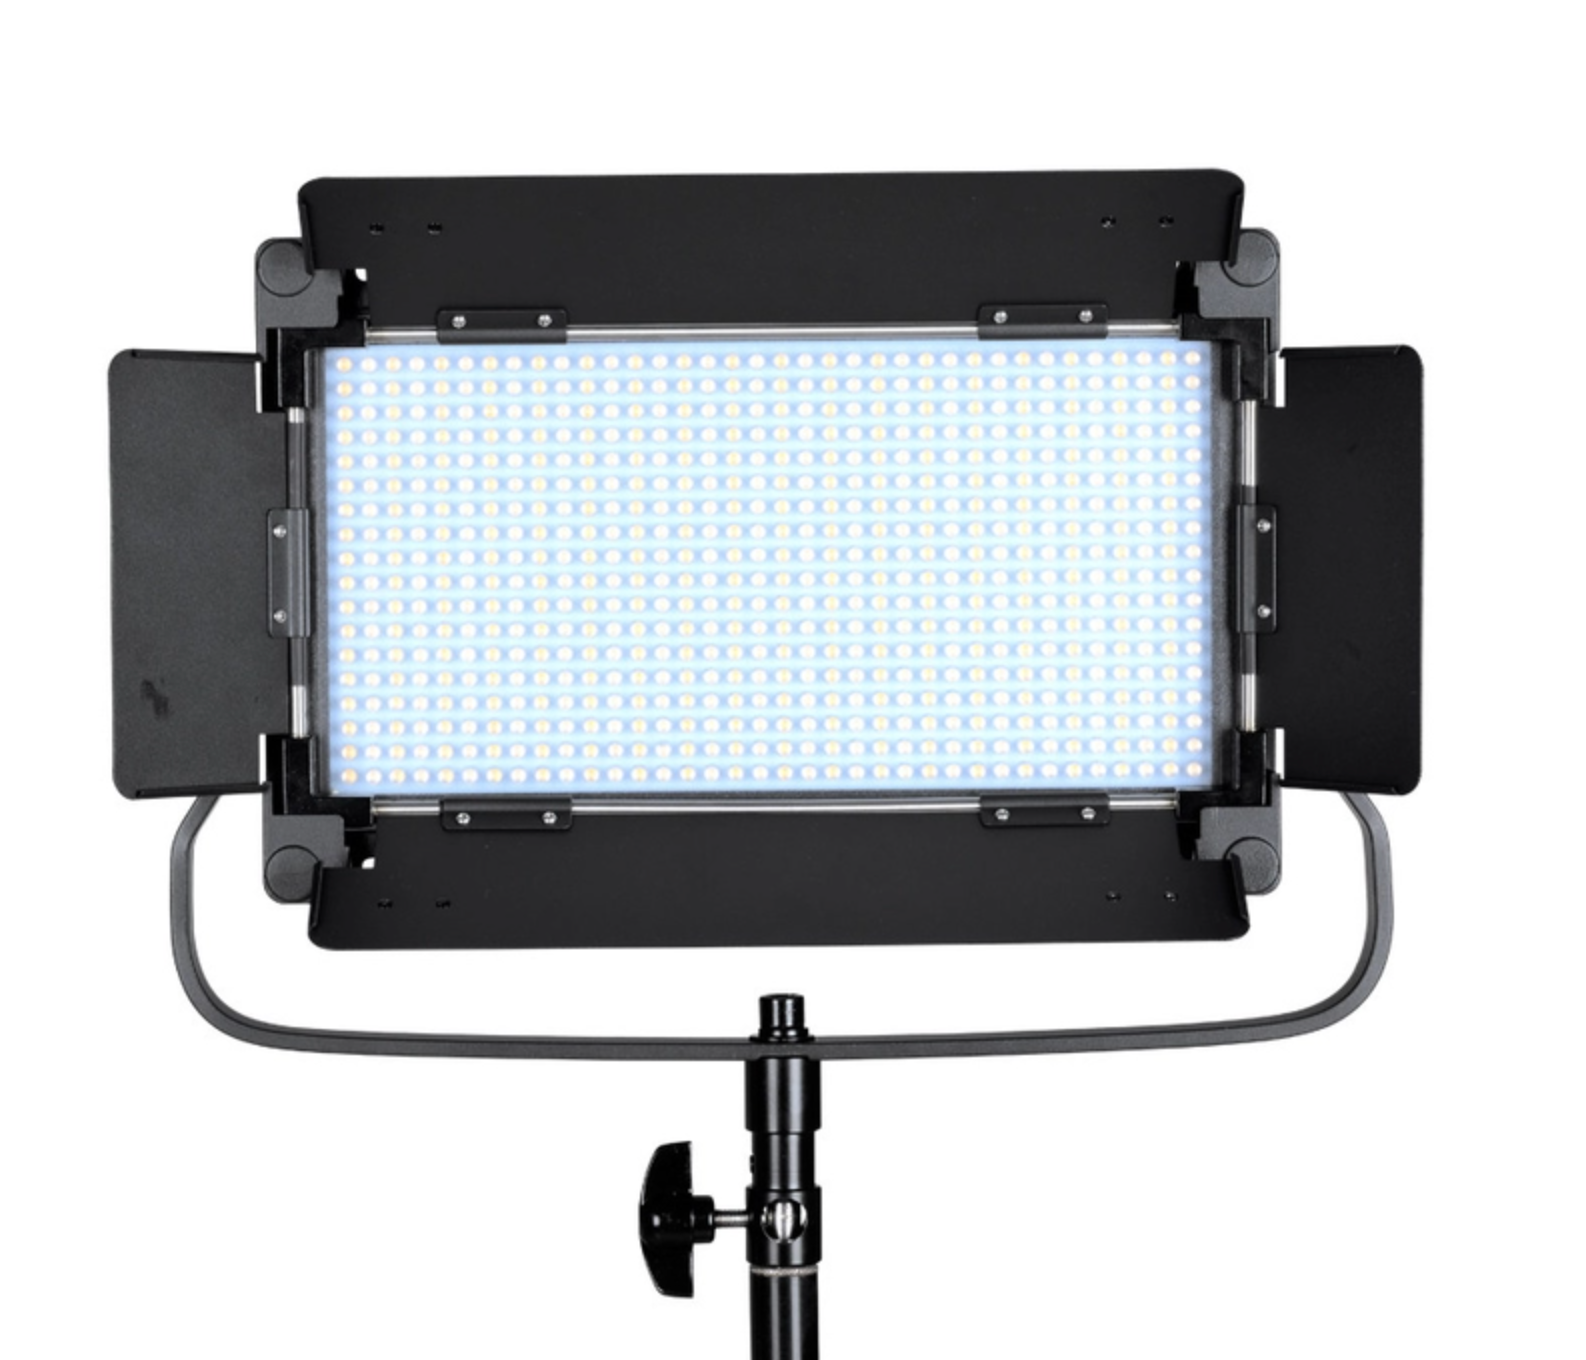 LED650AS Bi-color 5600-3200K LED video Light workable with 2pcs of F550 batteries